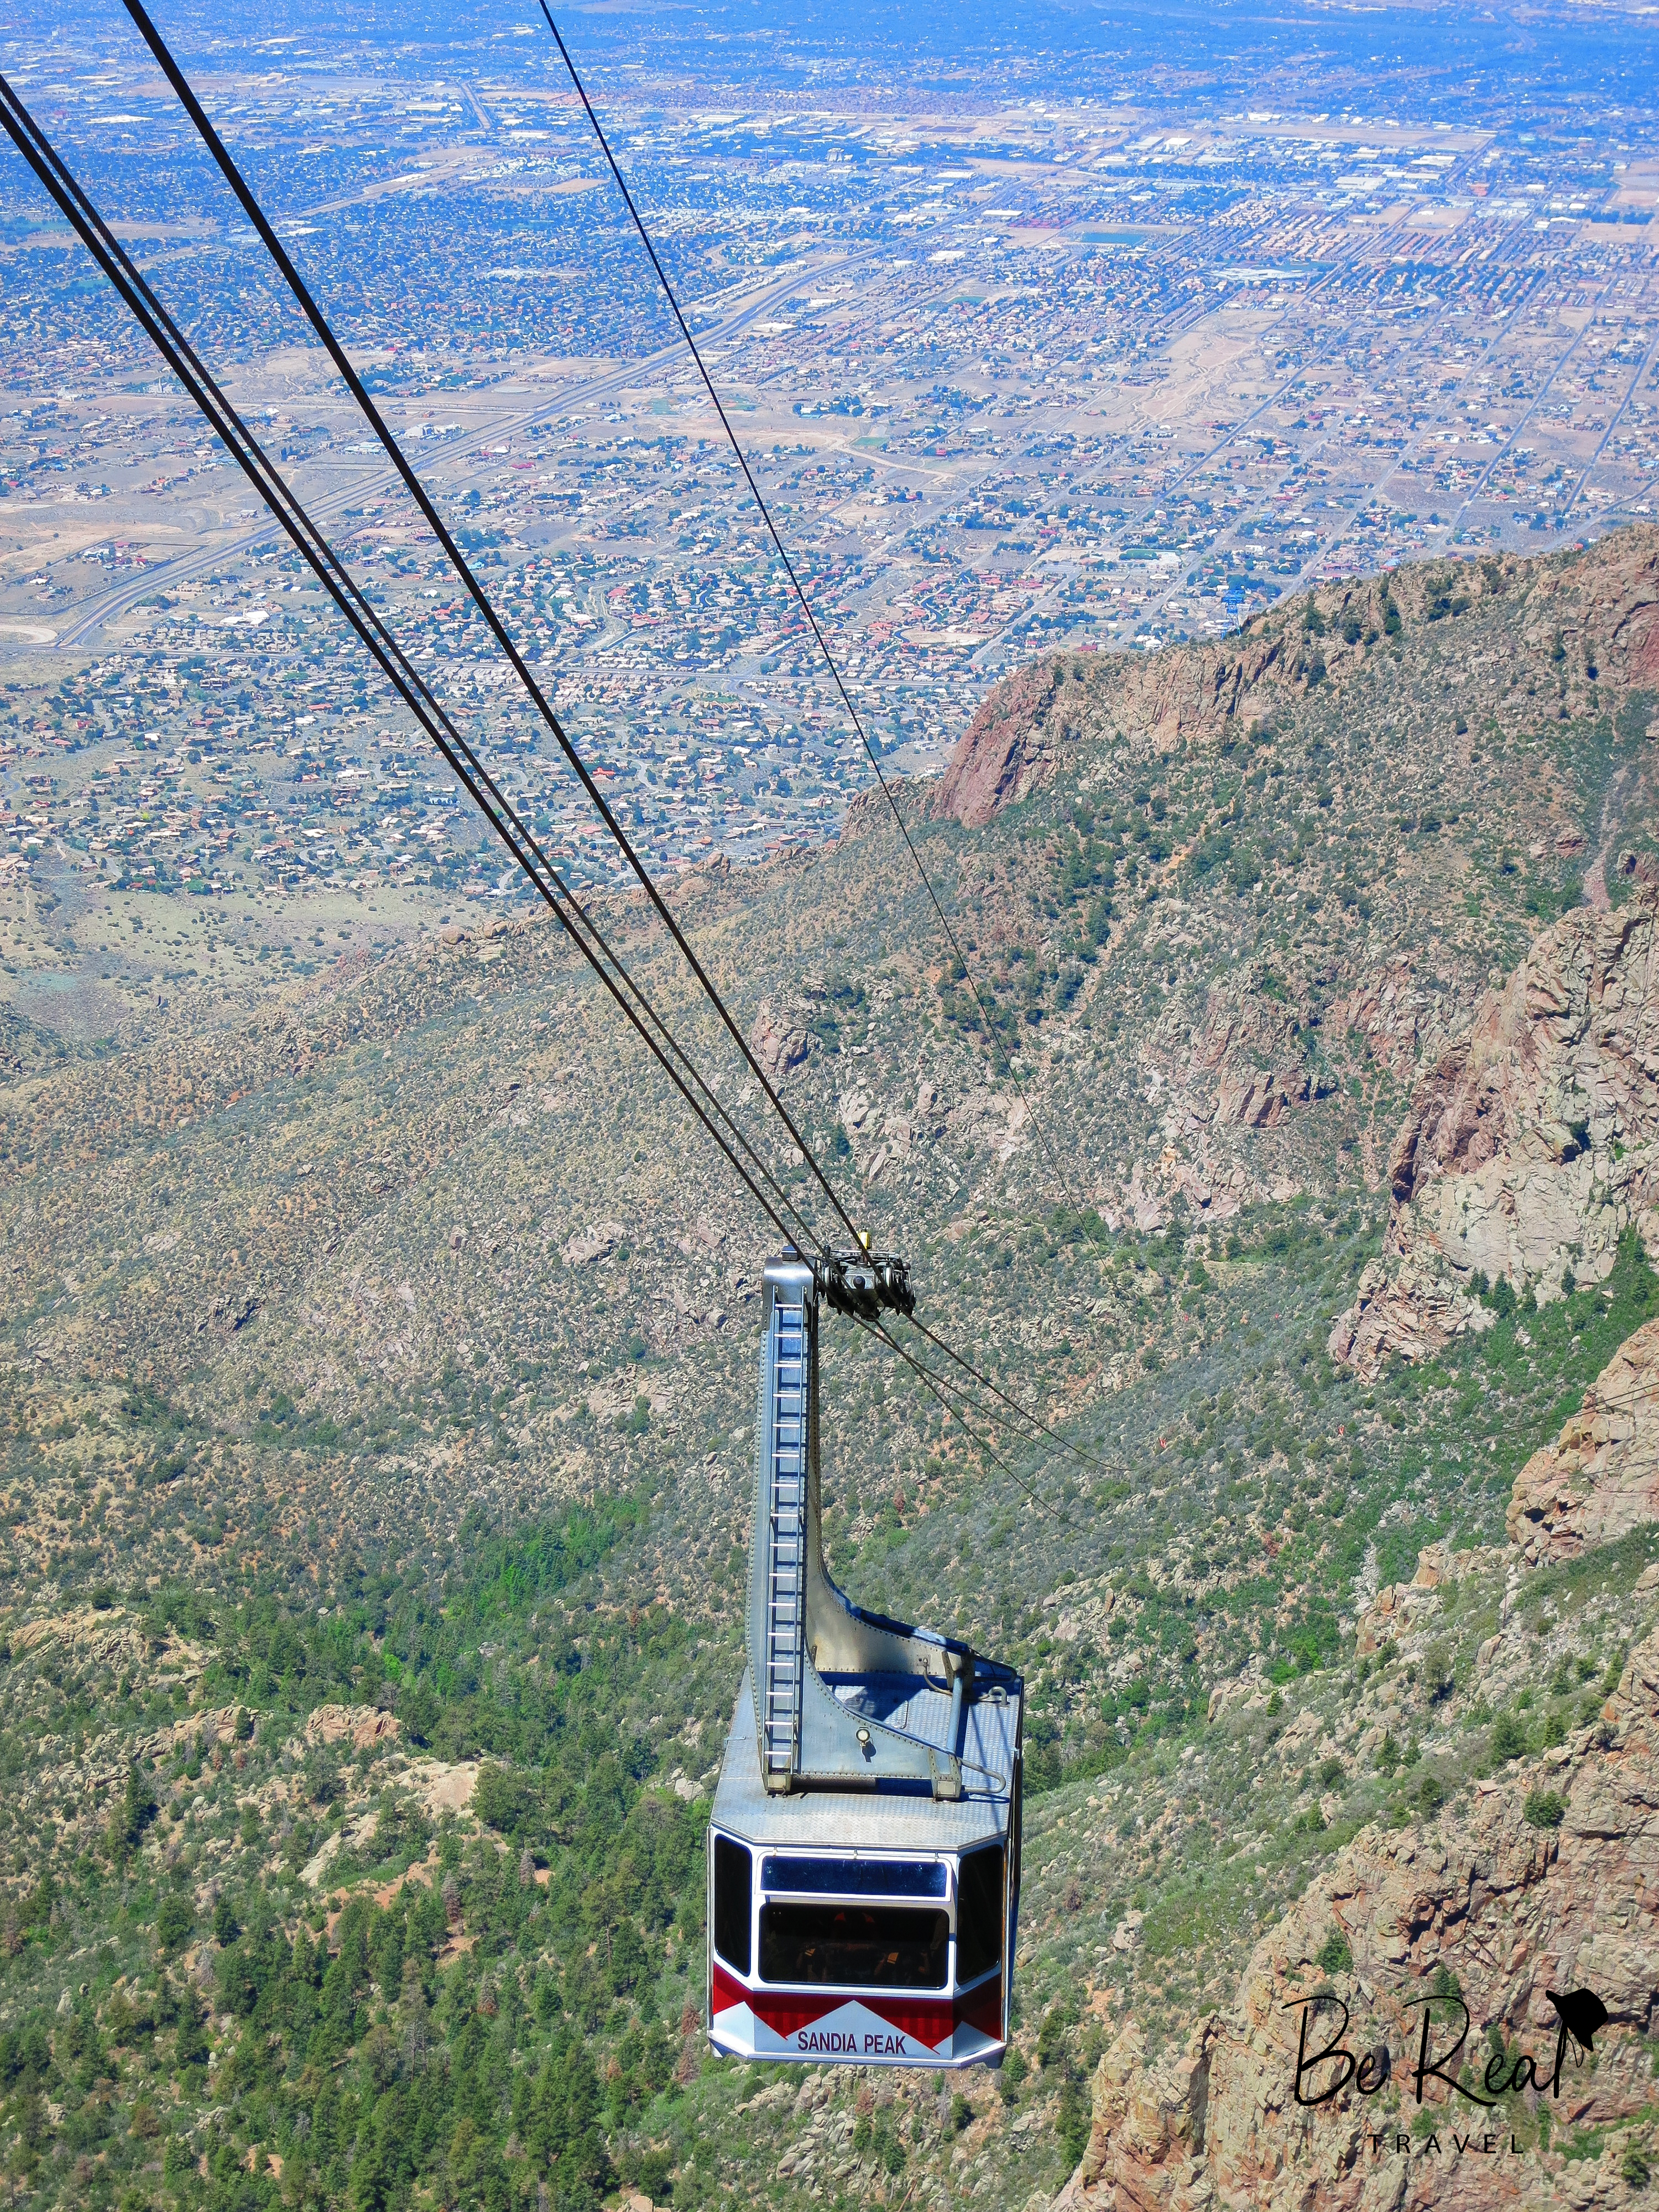 The Sandia Peak Tram descends above the Sandia Mountains in New Mexico